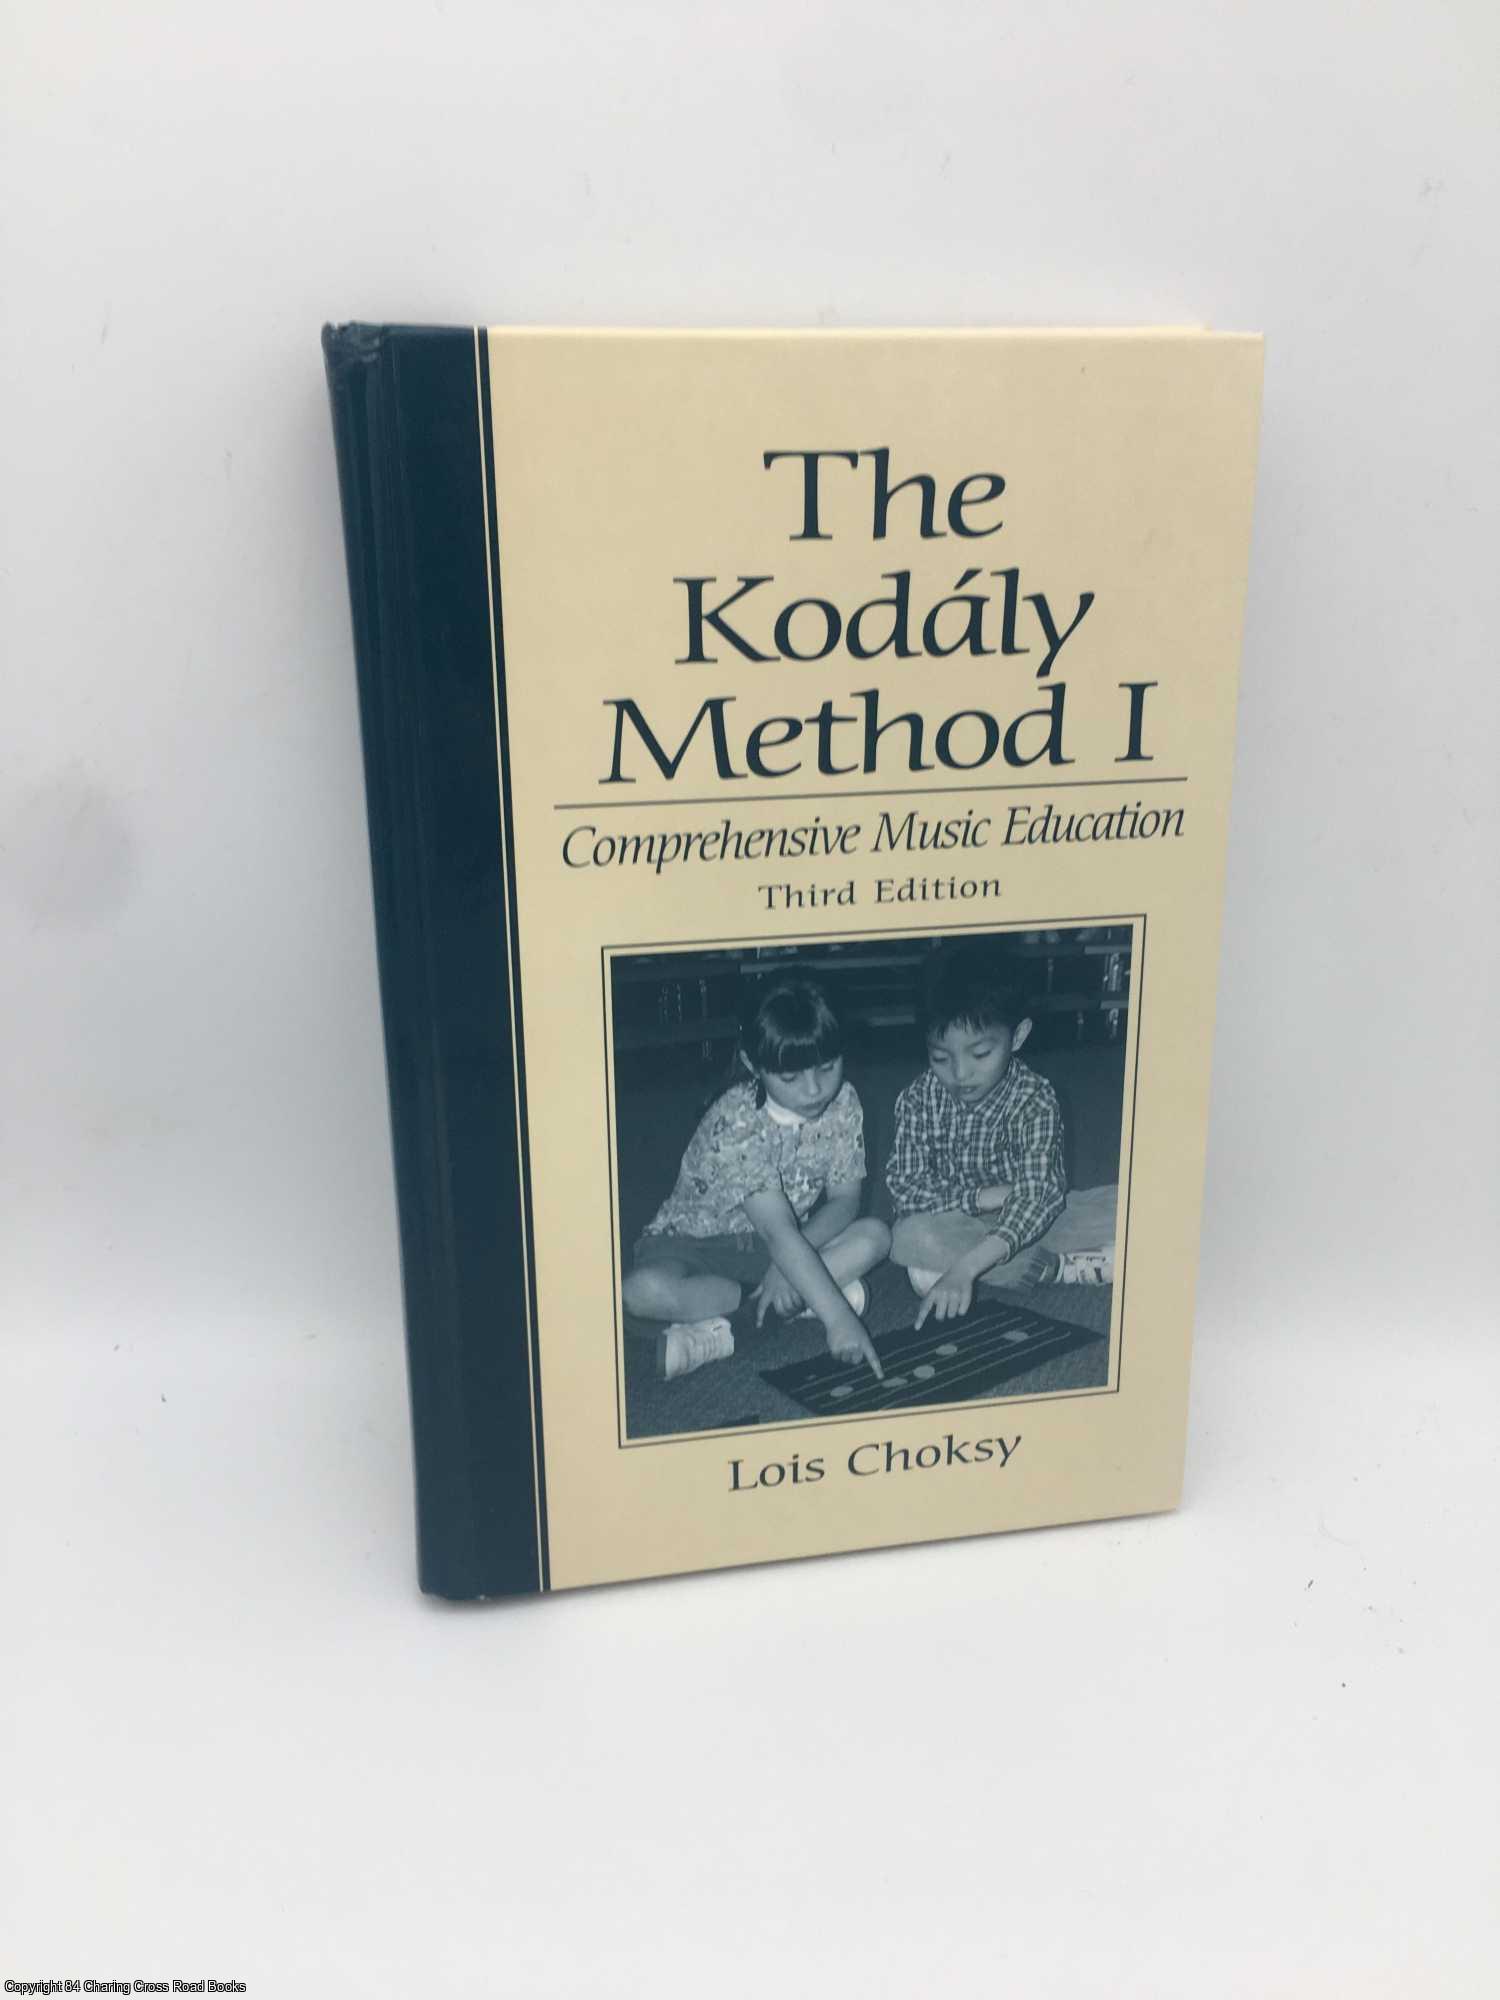 Choksy, Lois - The Kodaly Method I: Comprehensive Music Education